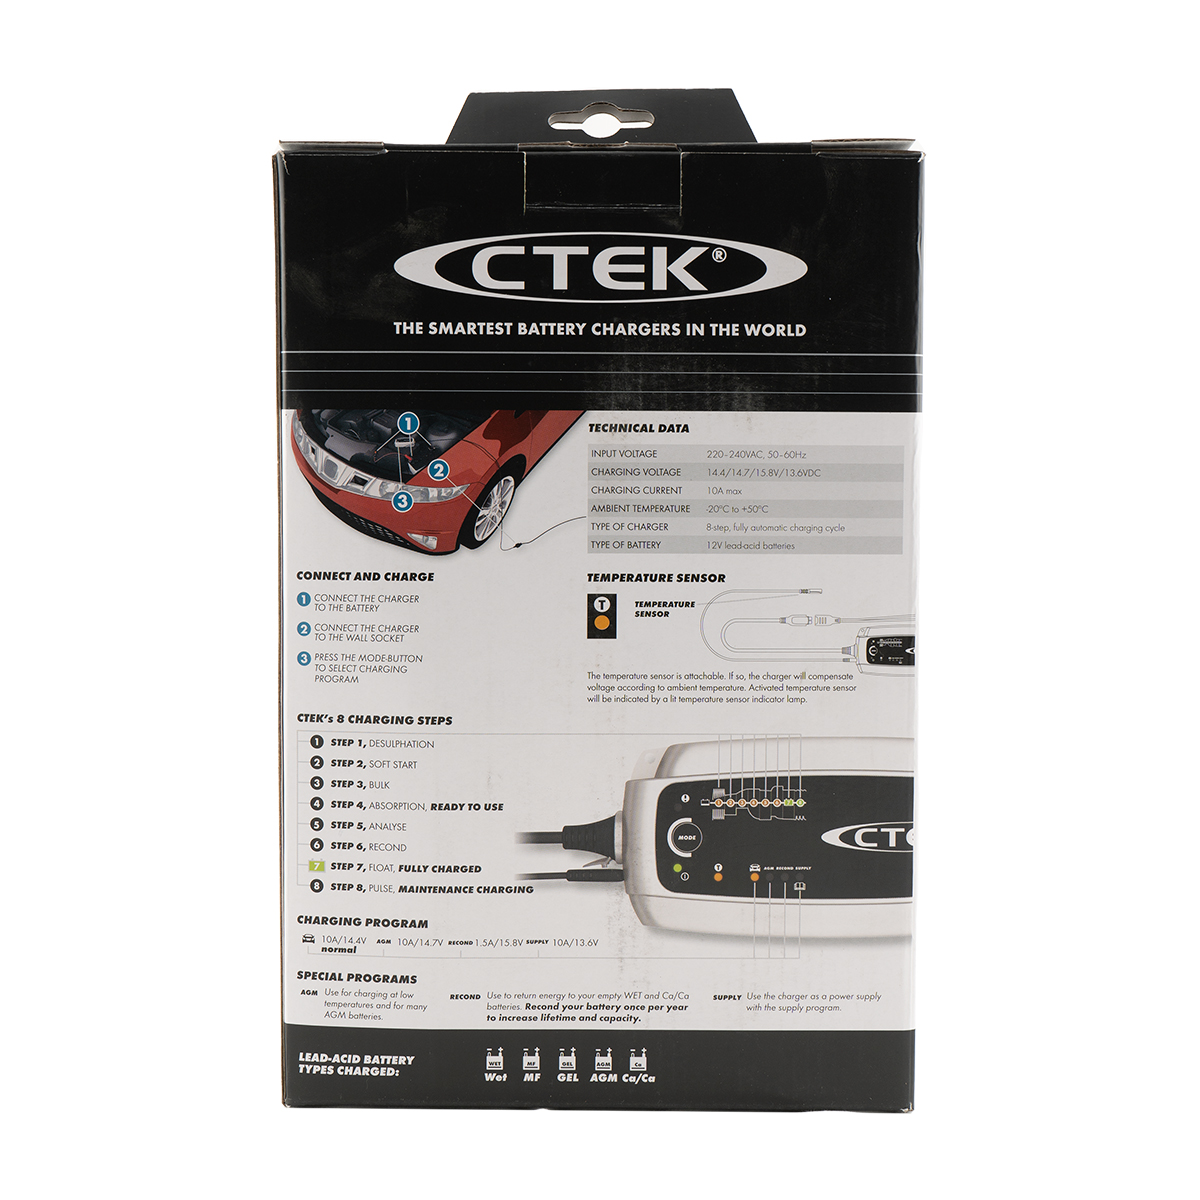 CTEK MXS 10 CIC EU Batterie Ladegerät 12V 10A